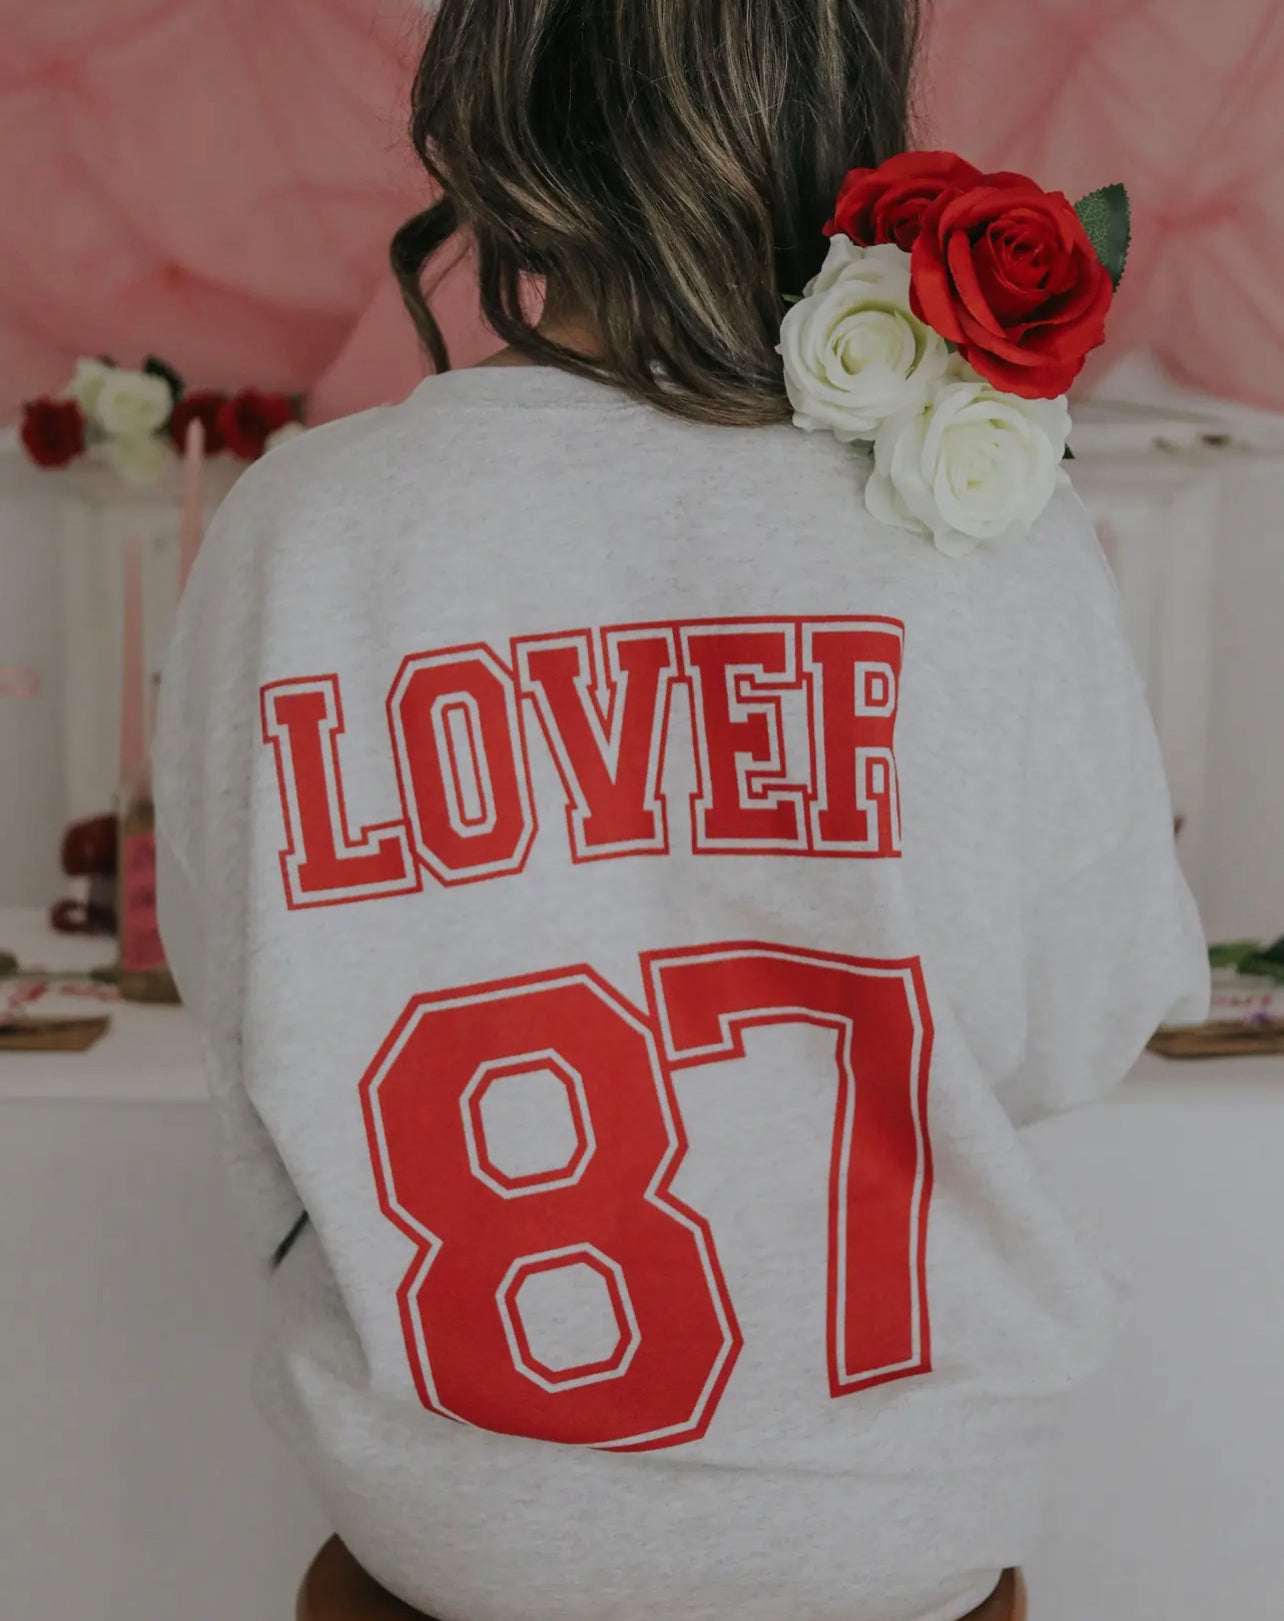 Lover 87 Grey Sweatshirt